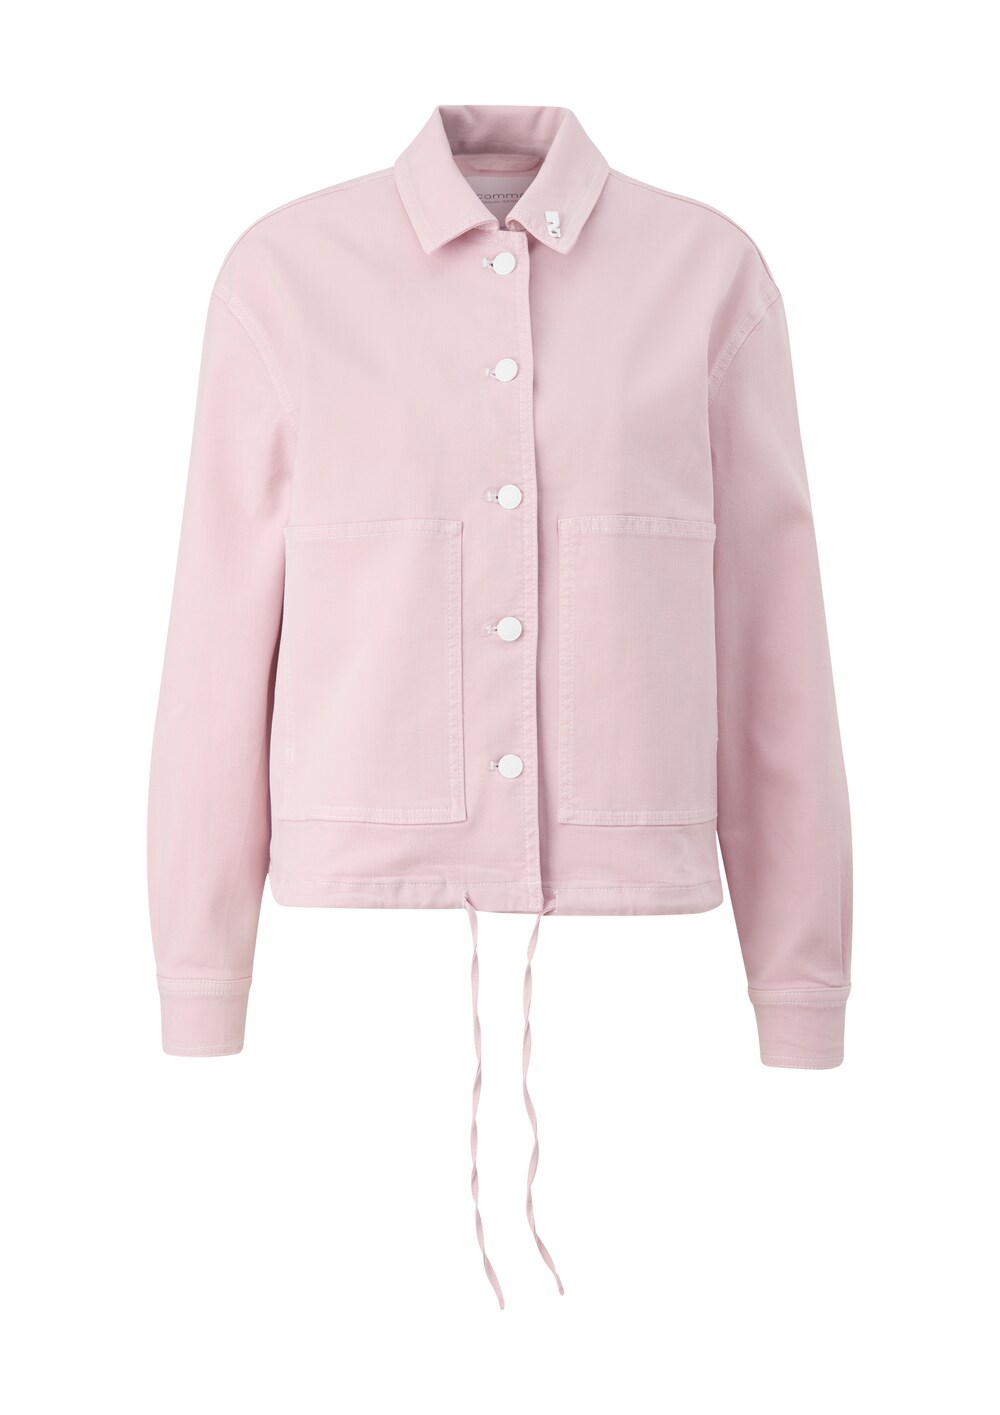 Межсезонная куртка Comma Casual Identity, розовый